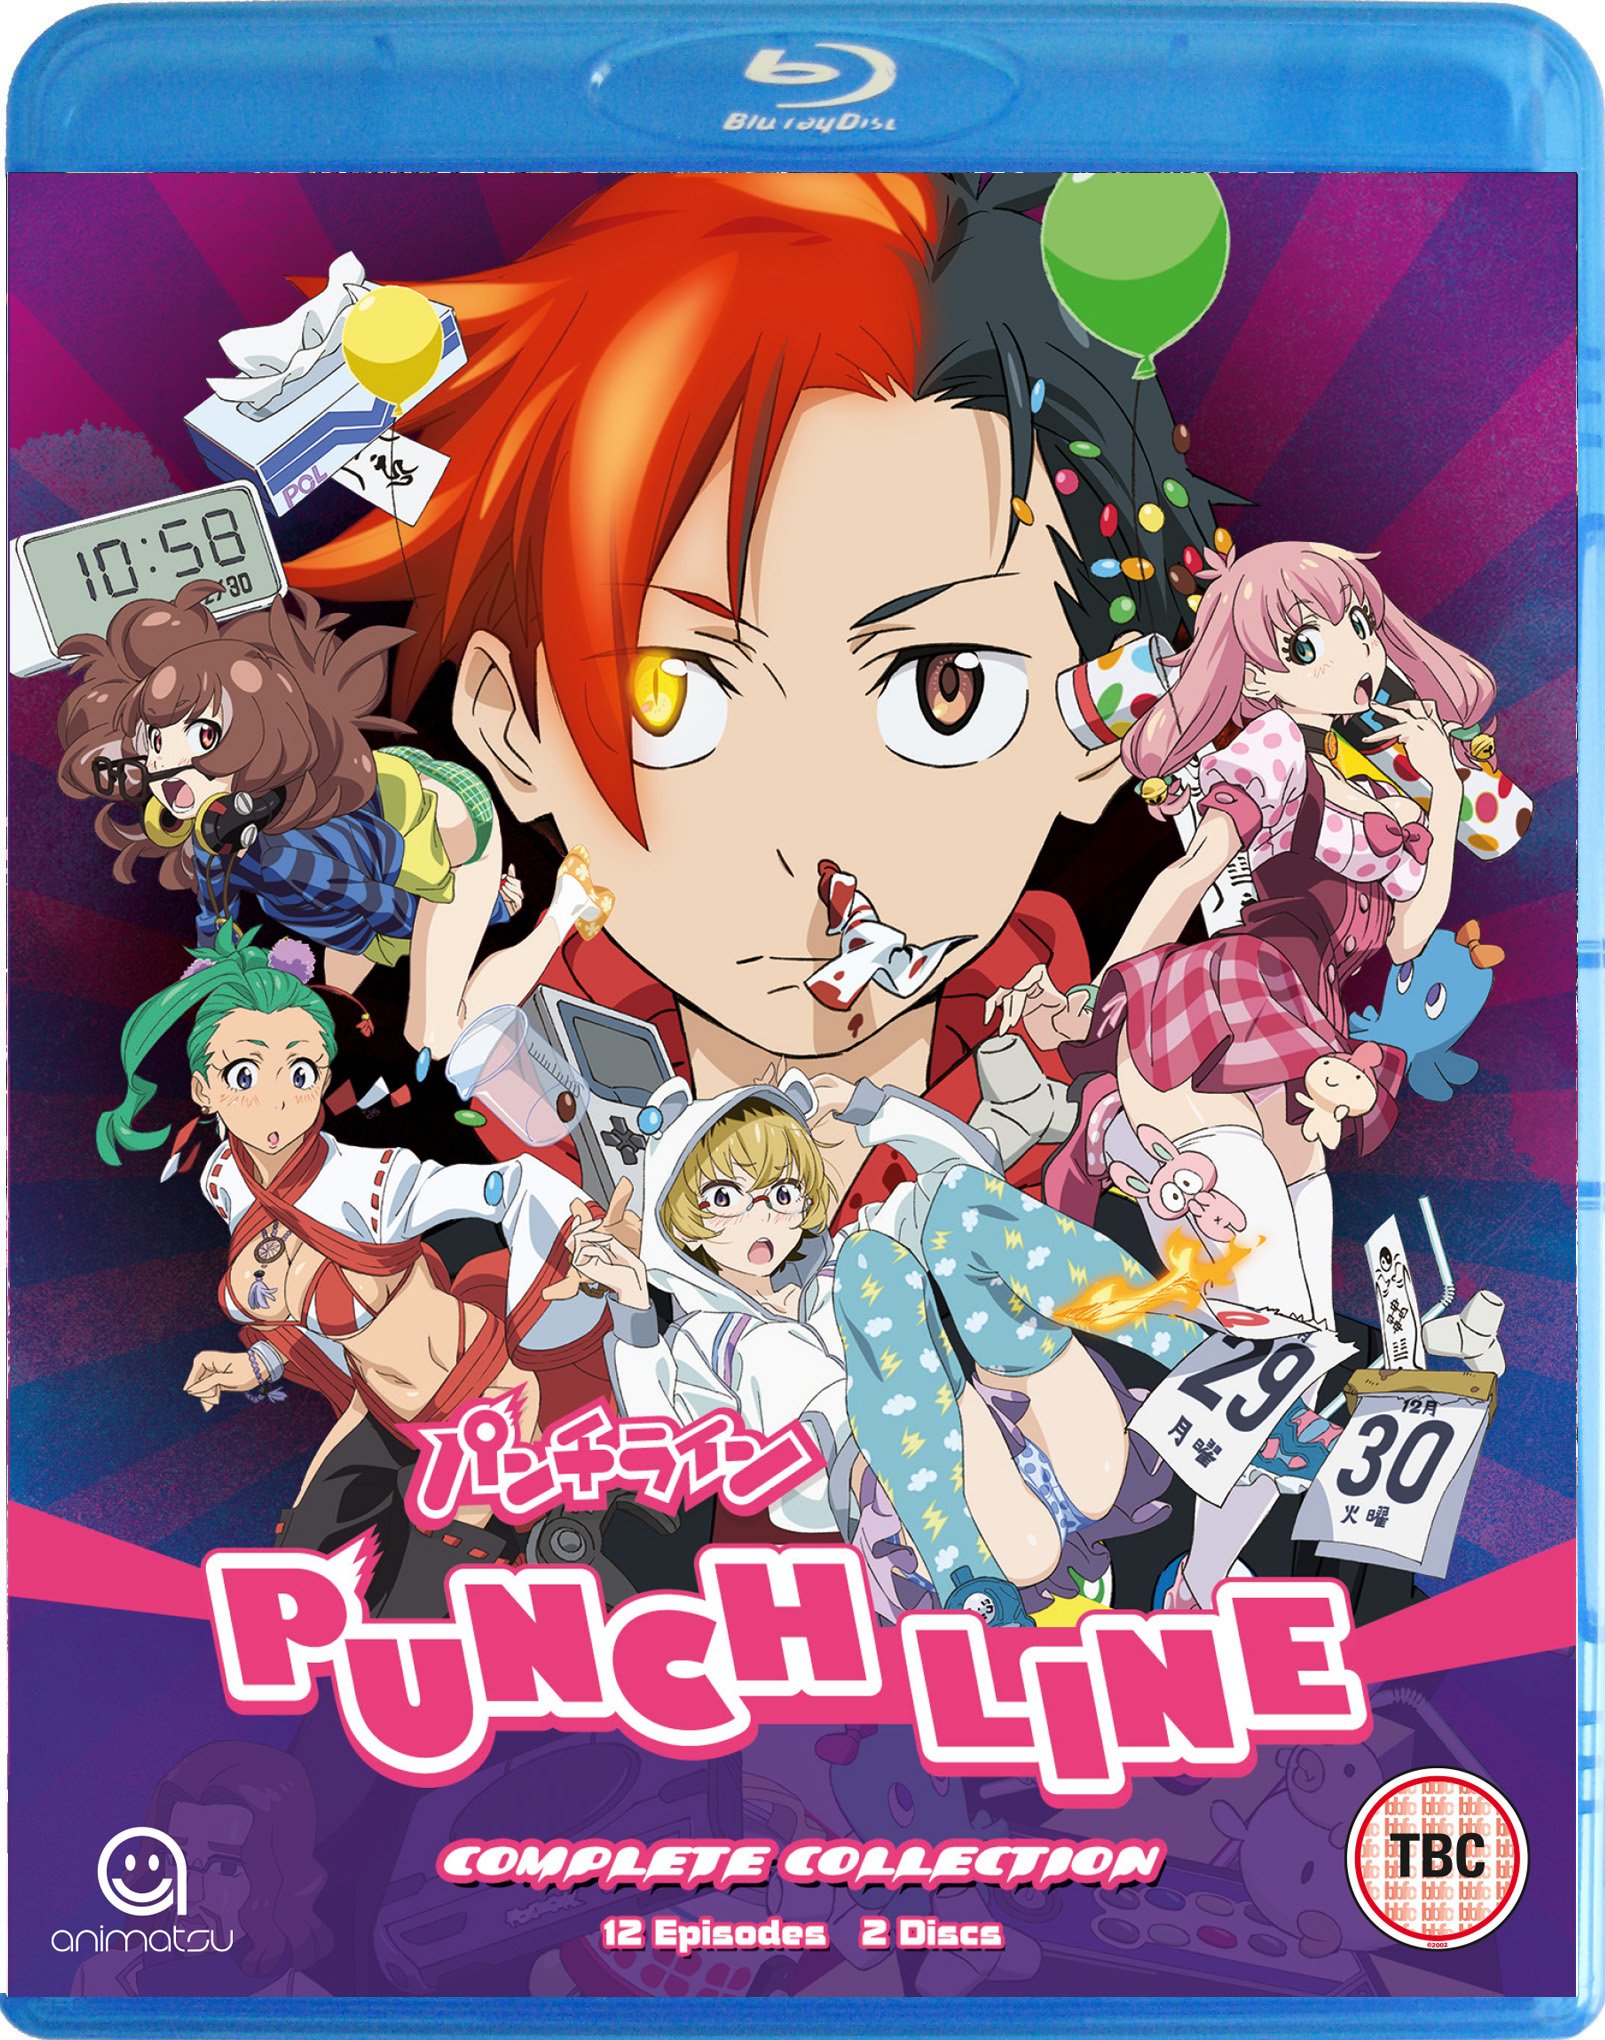 punchline punch line yuta | Anime, Punch line anime, Anime japan-demhanvico.com.vn